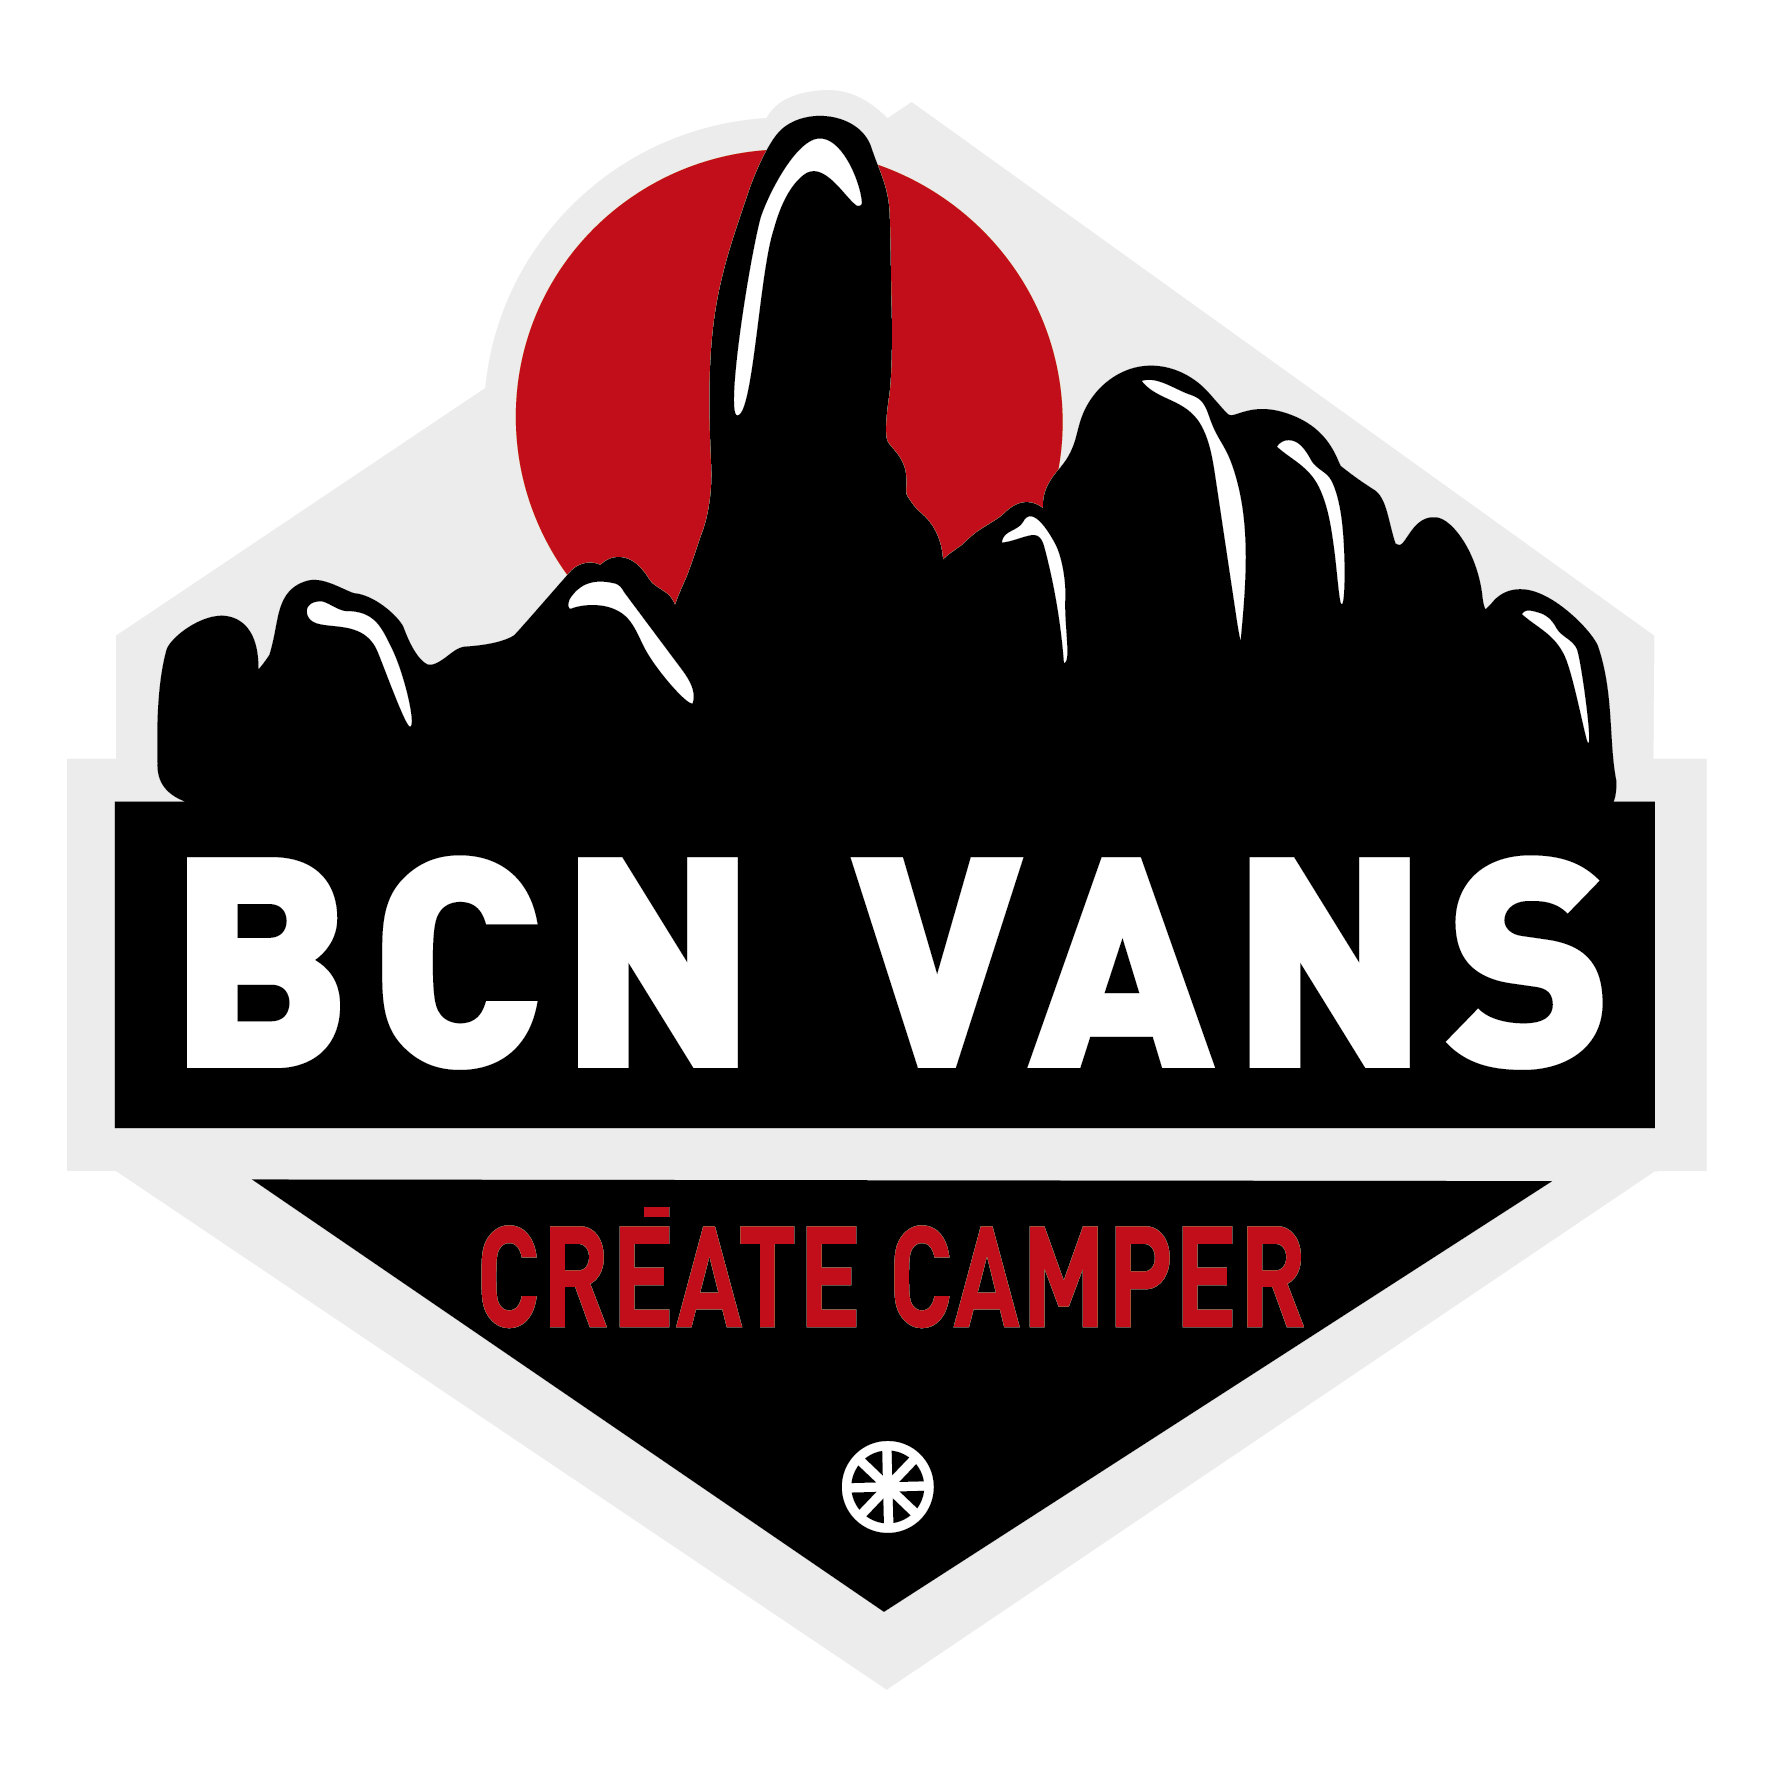 bcnvans furgoneta camper